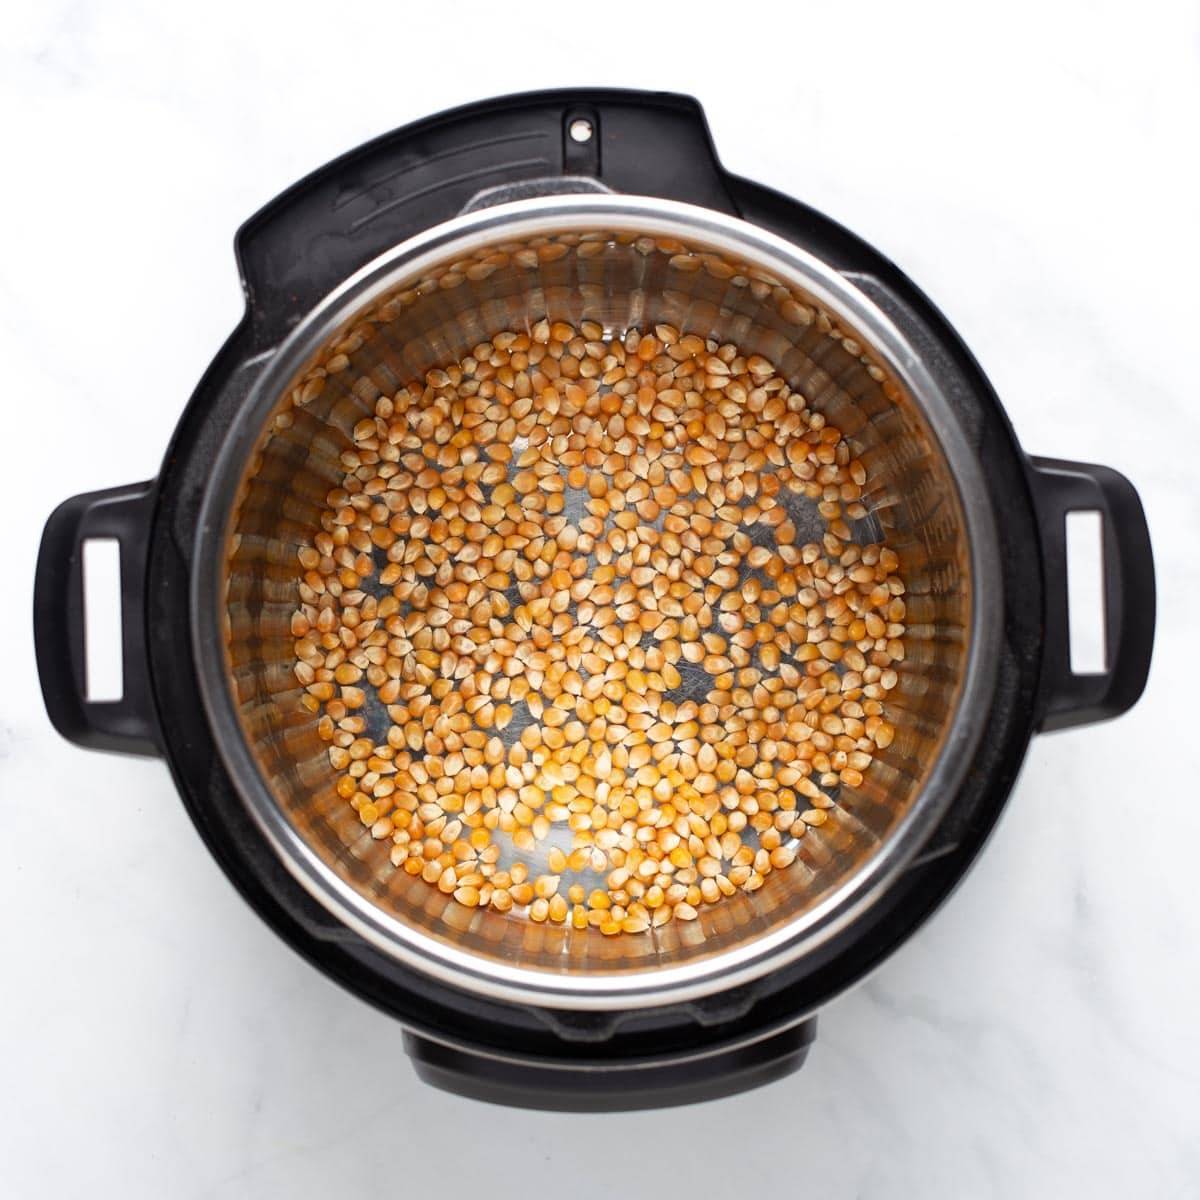 Raw popcorn kernels in the Instant Pot.